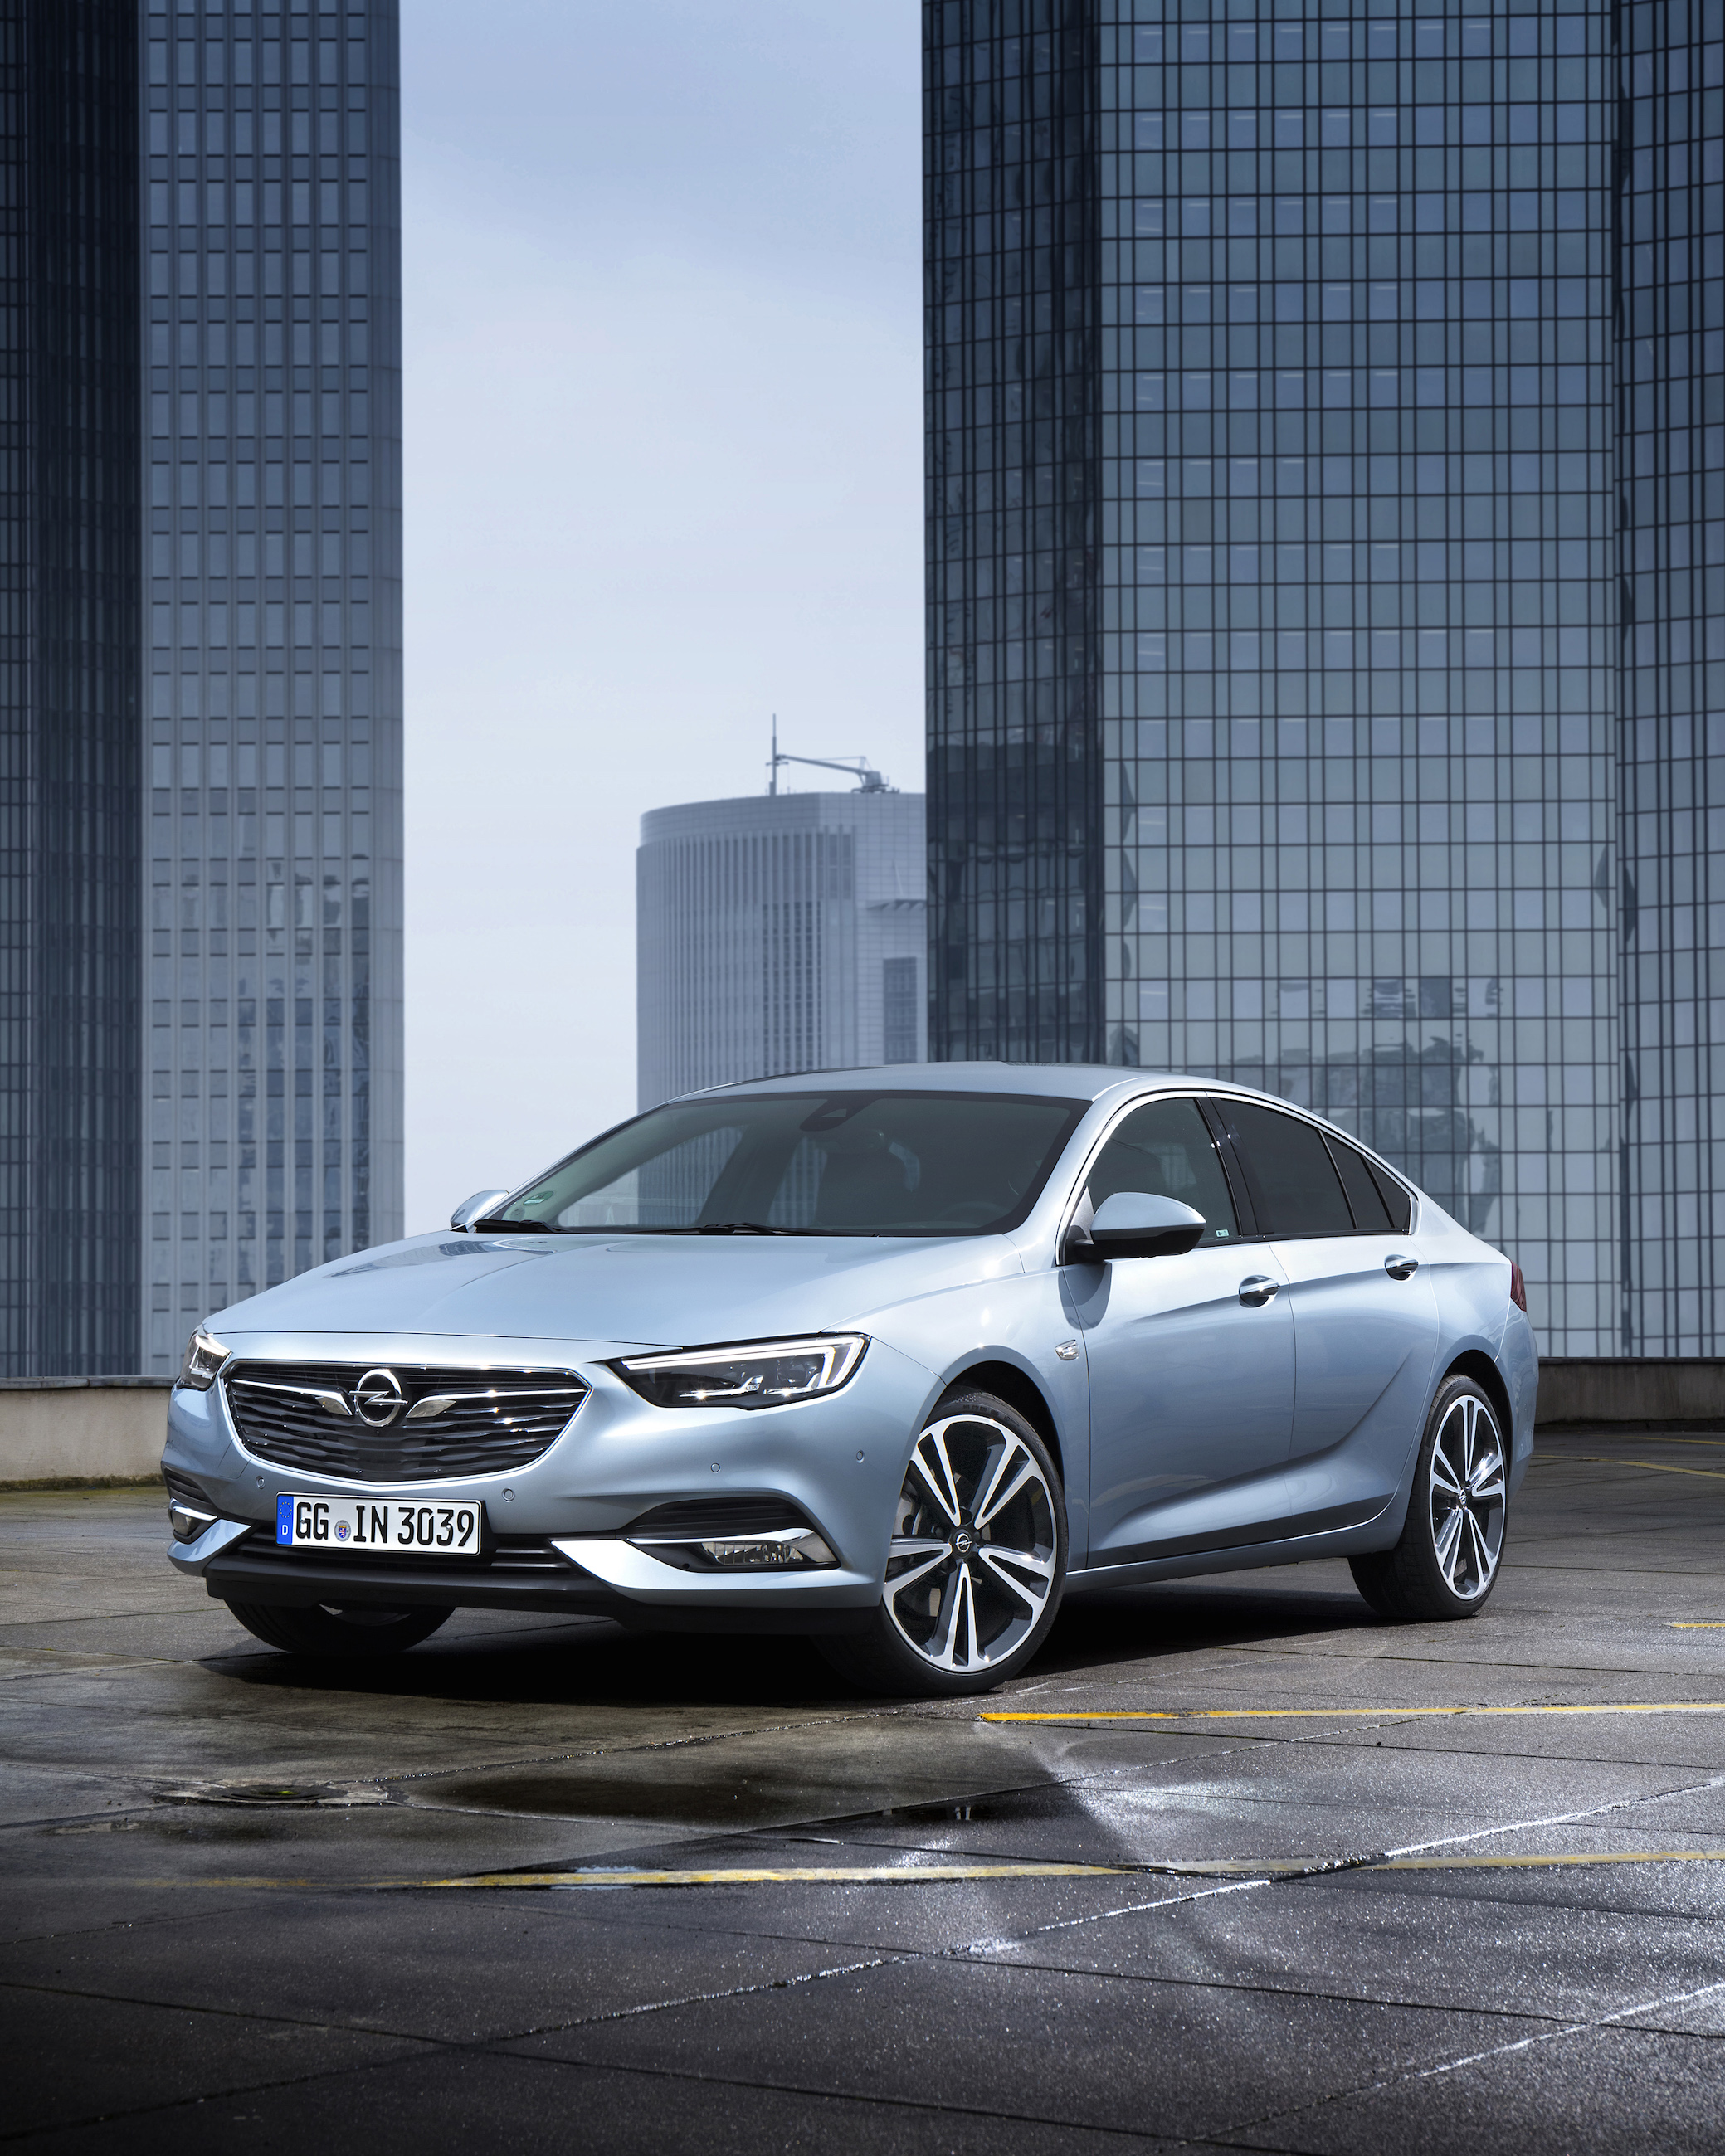 Opel Insignia Grand Sport exterior specifications